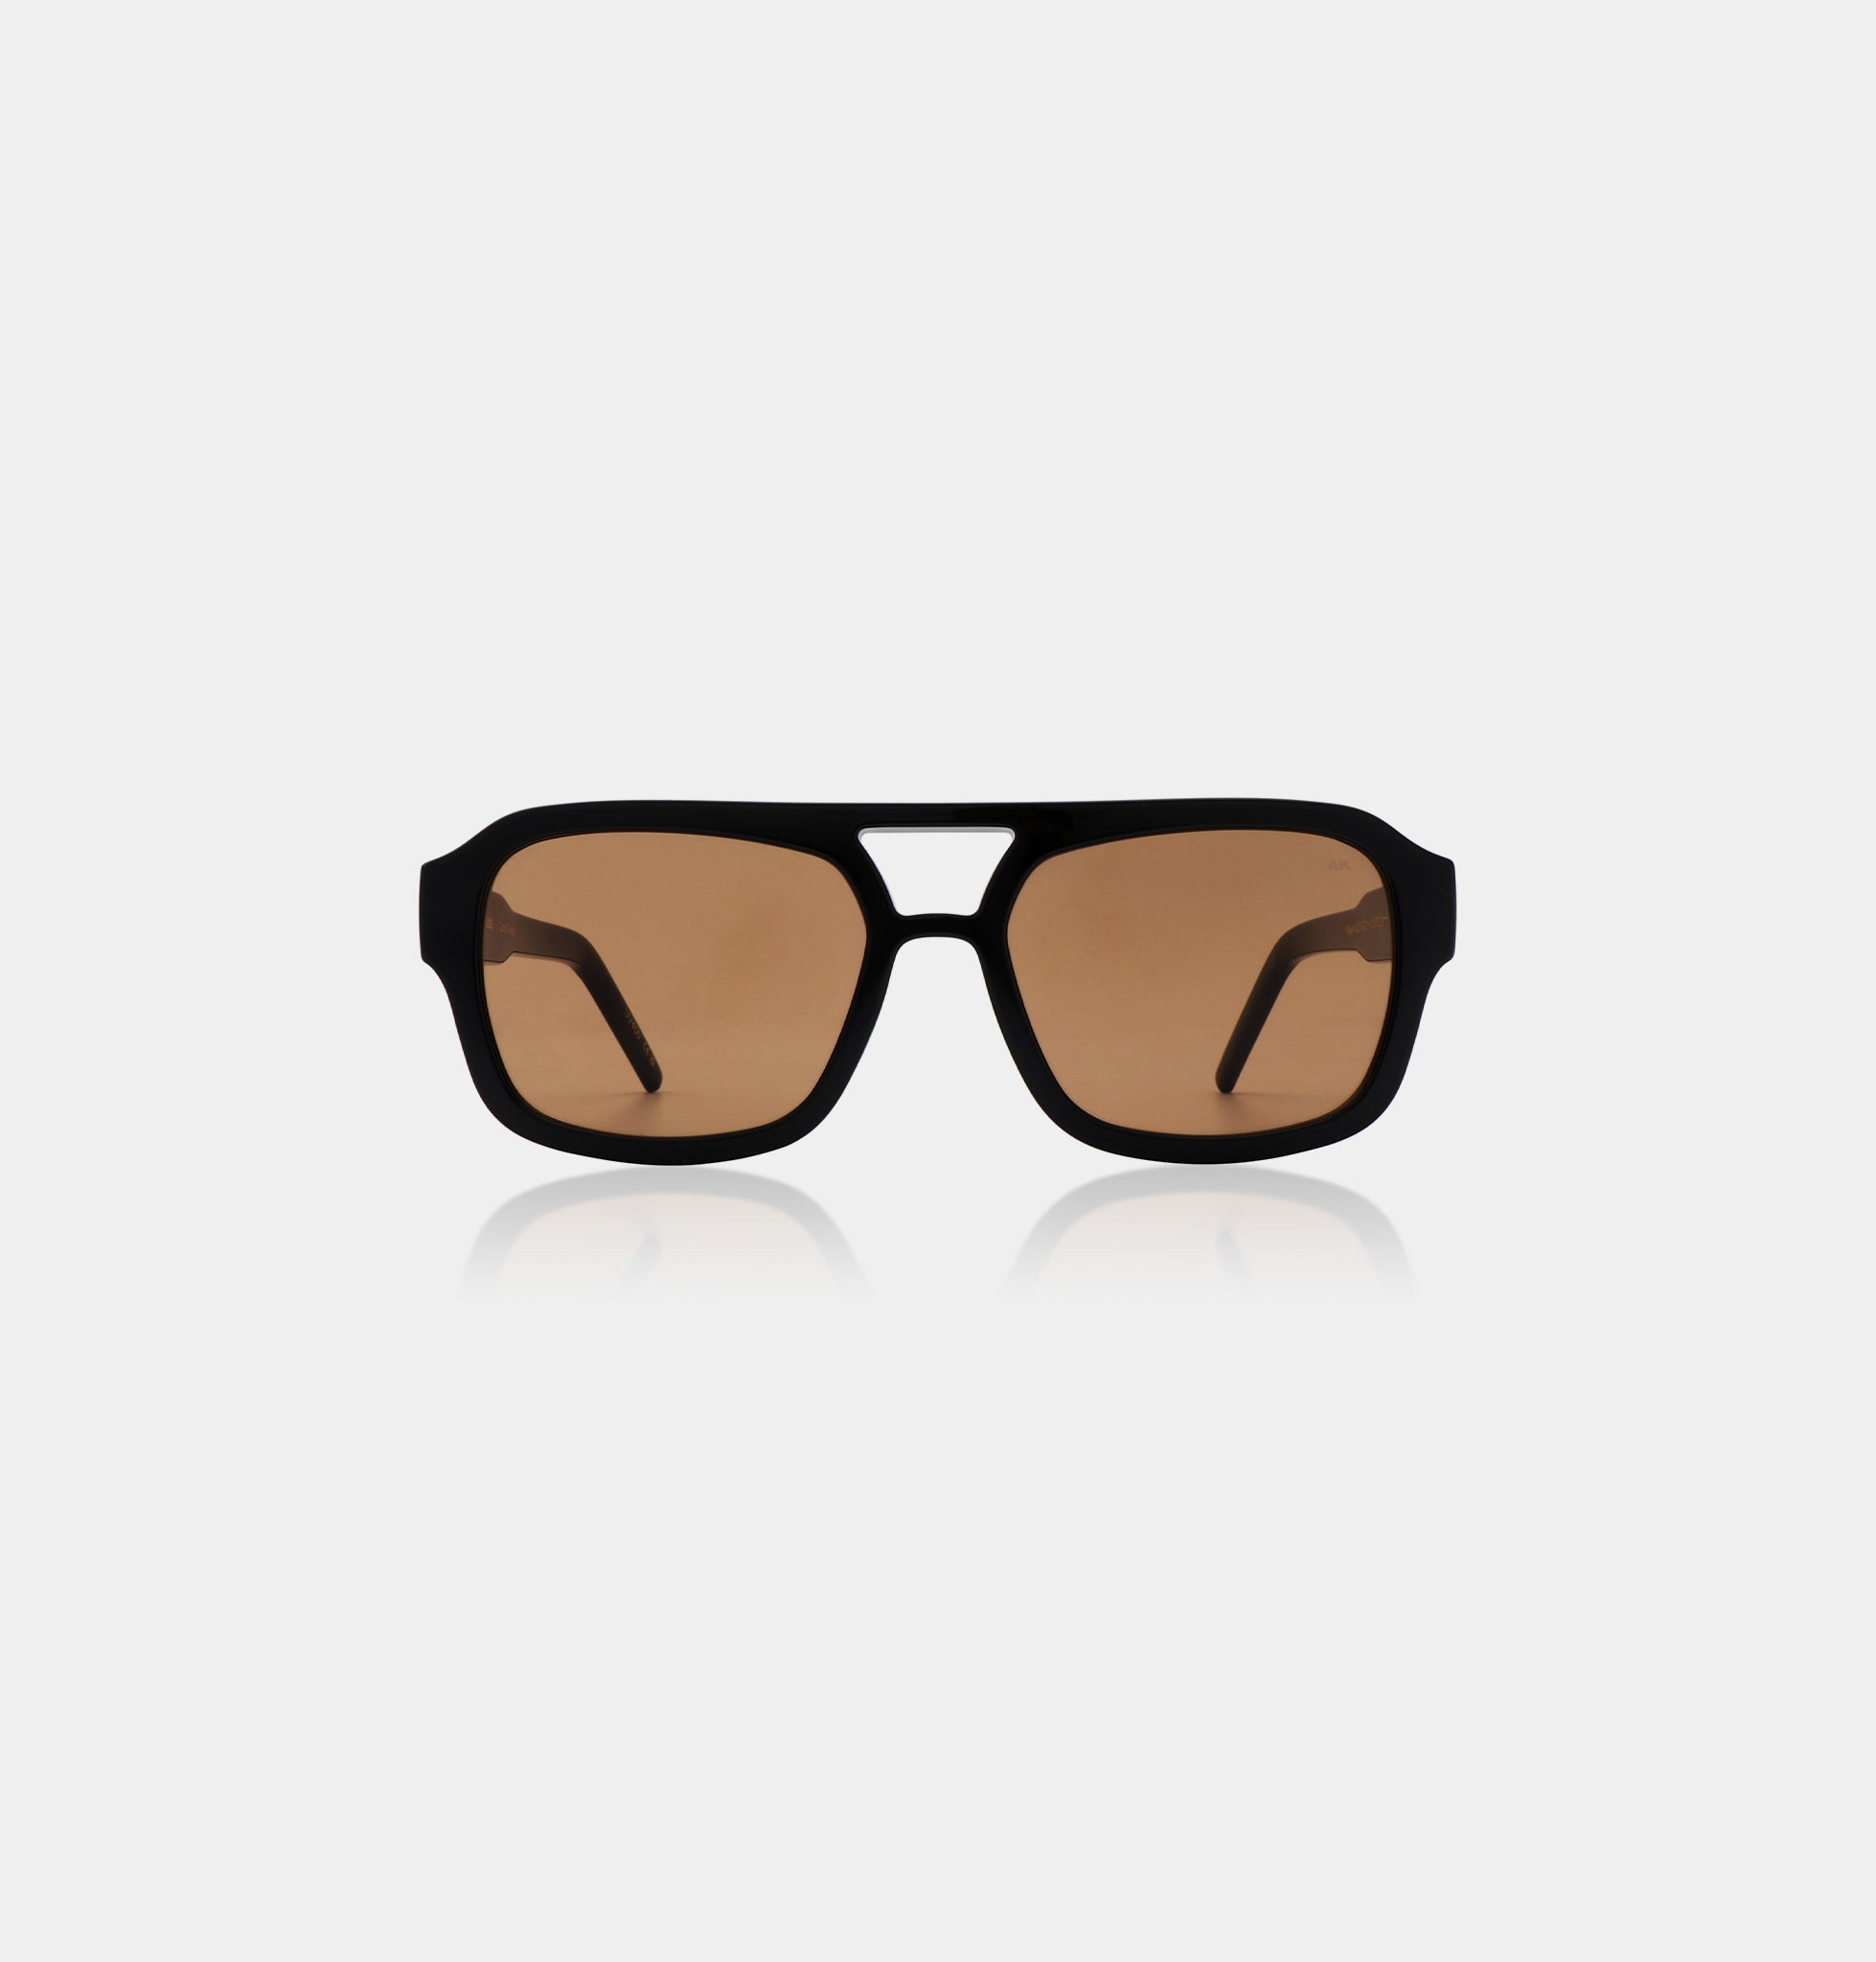 Kaya sunglasses in black